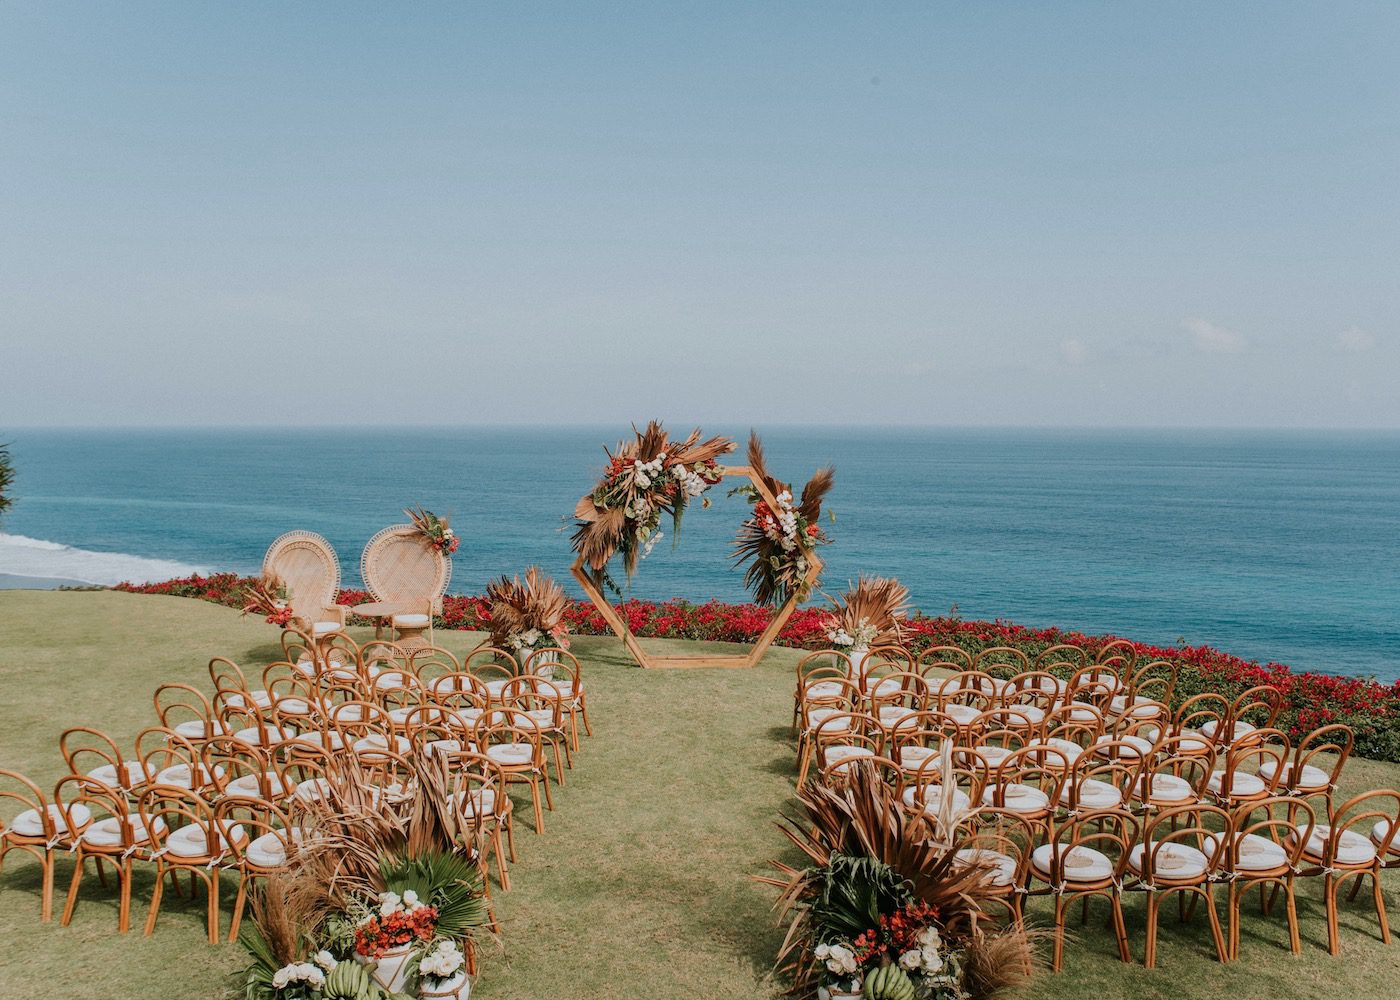 Weddings at 5 star resort Bali